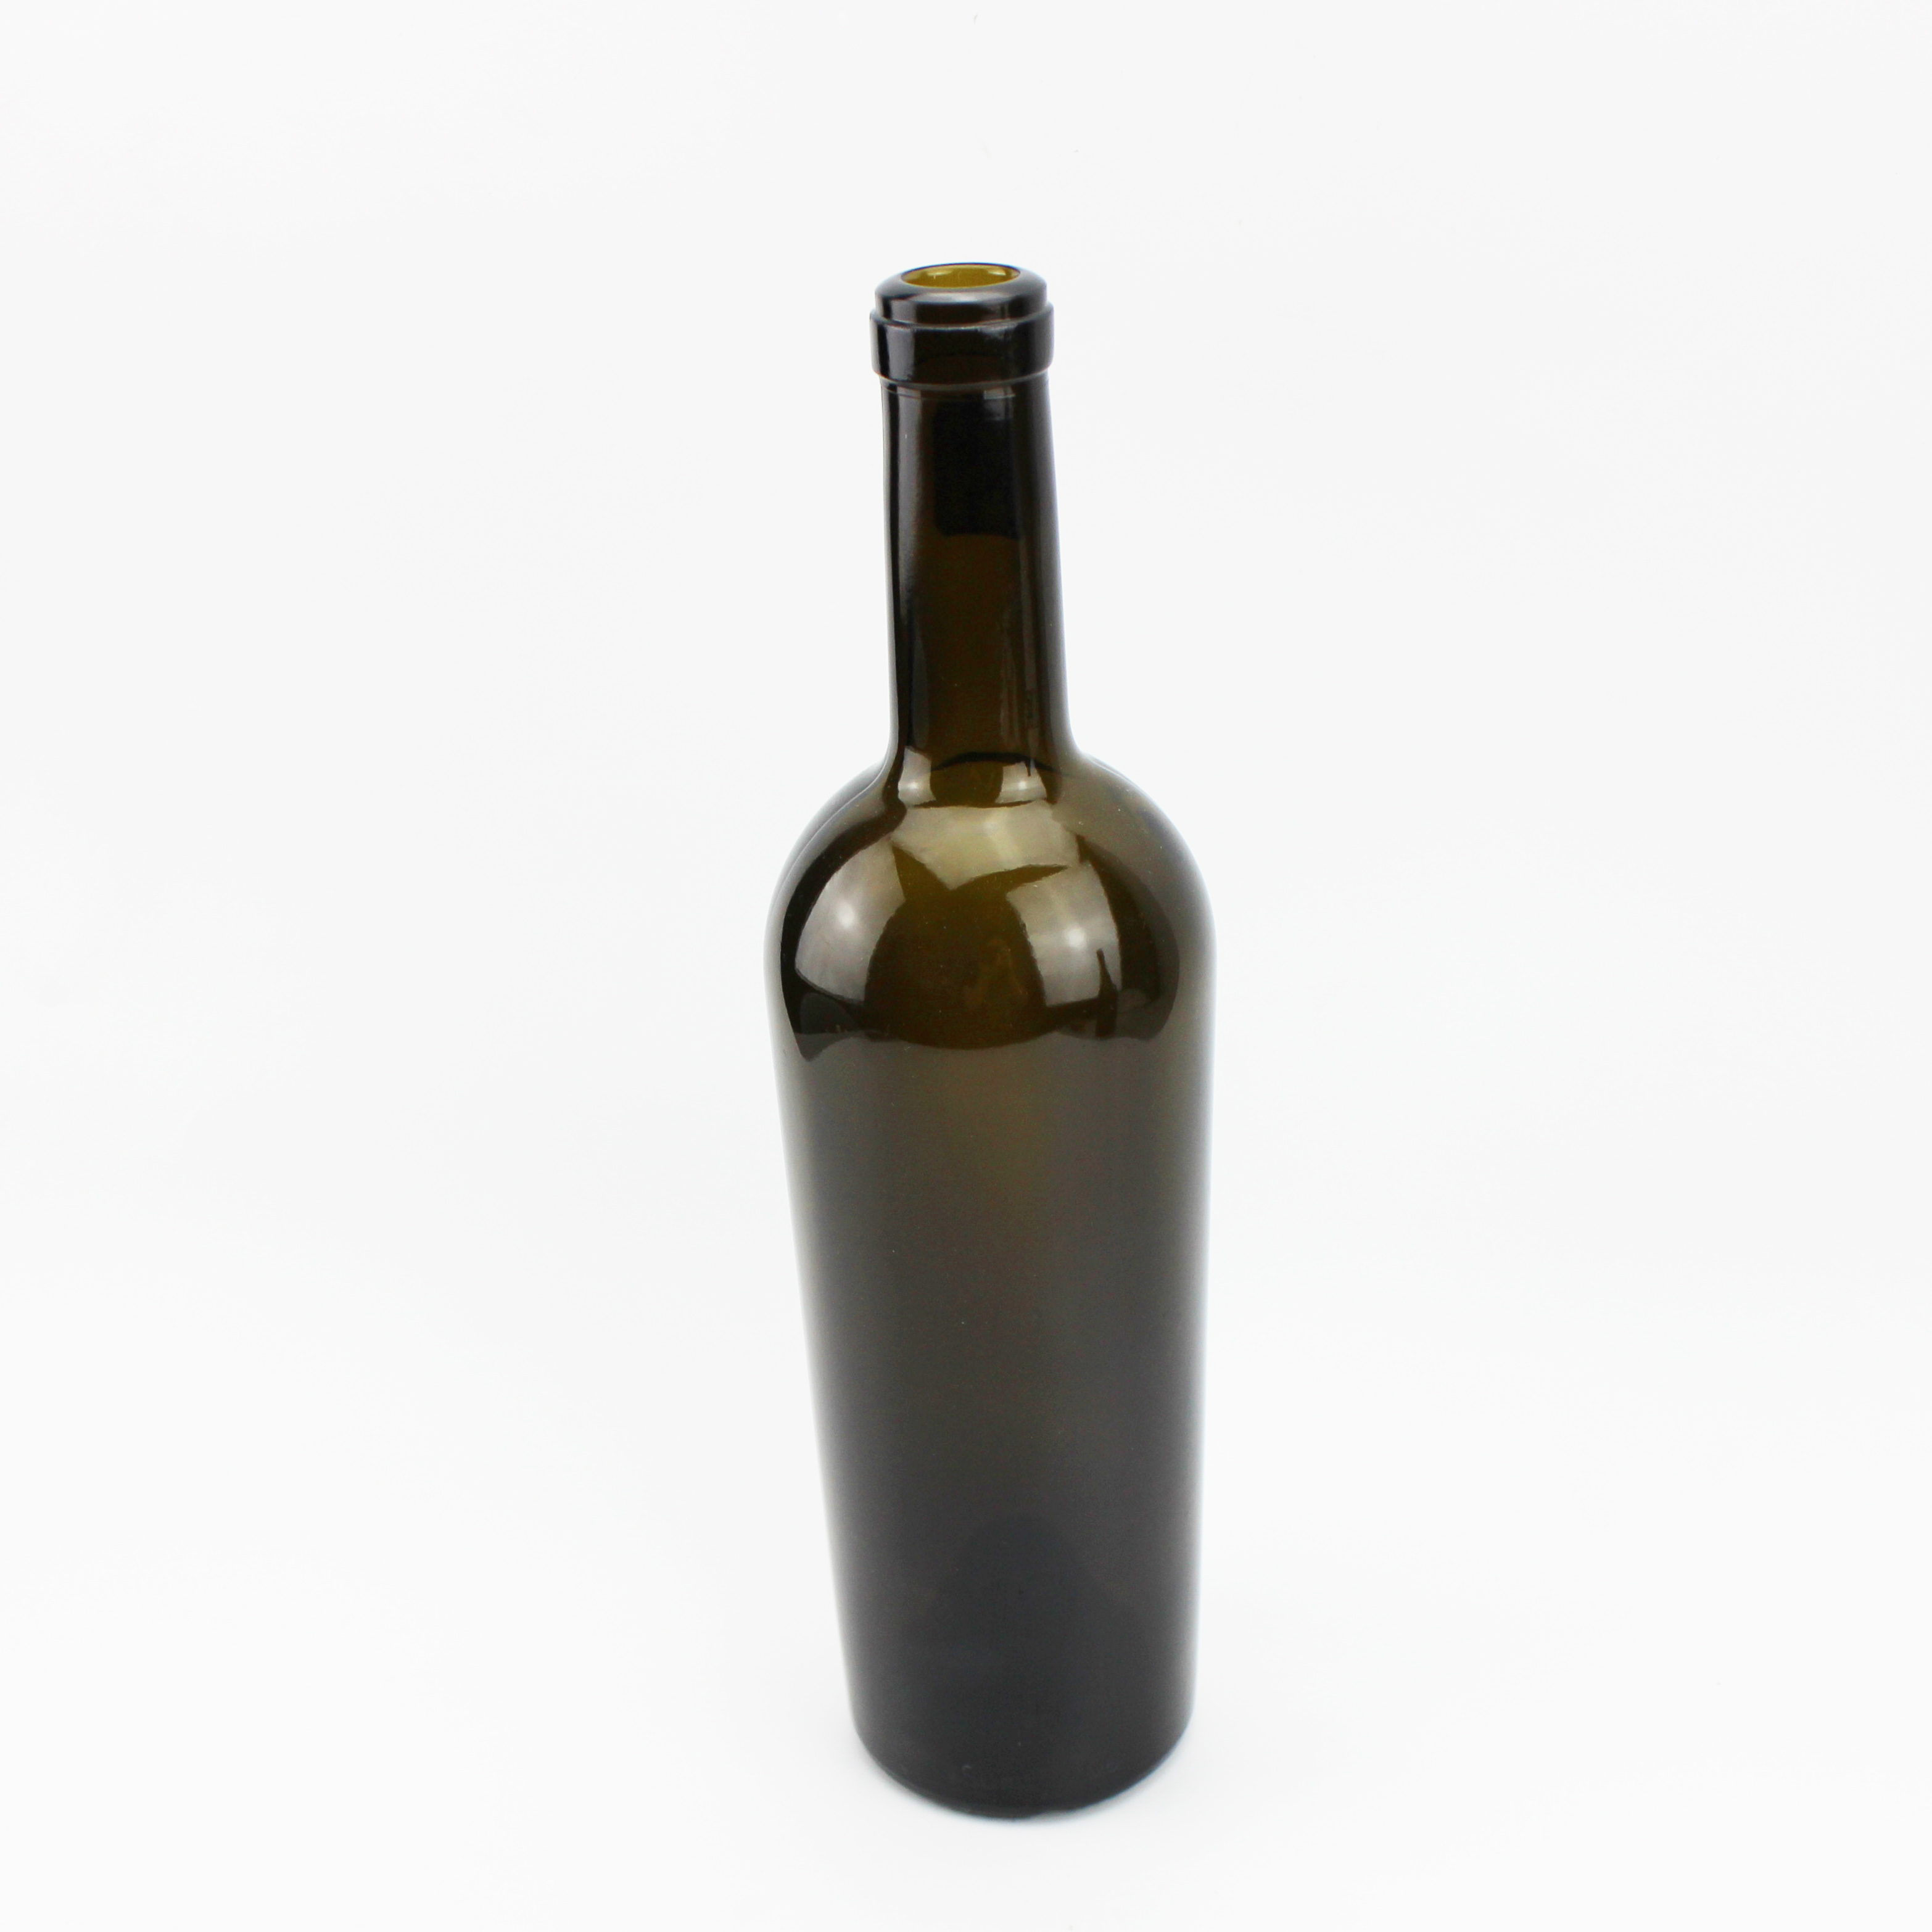 Cork Top Wholesale 750ml Glass Wine Bottle Dark Green